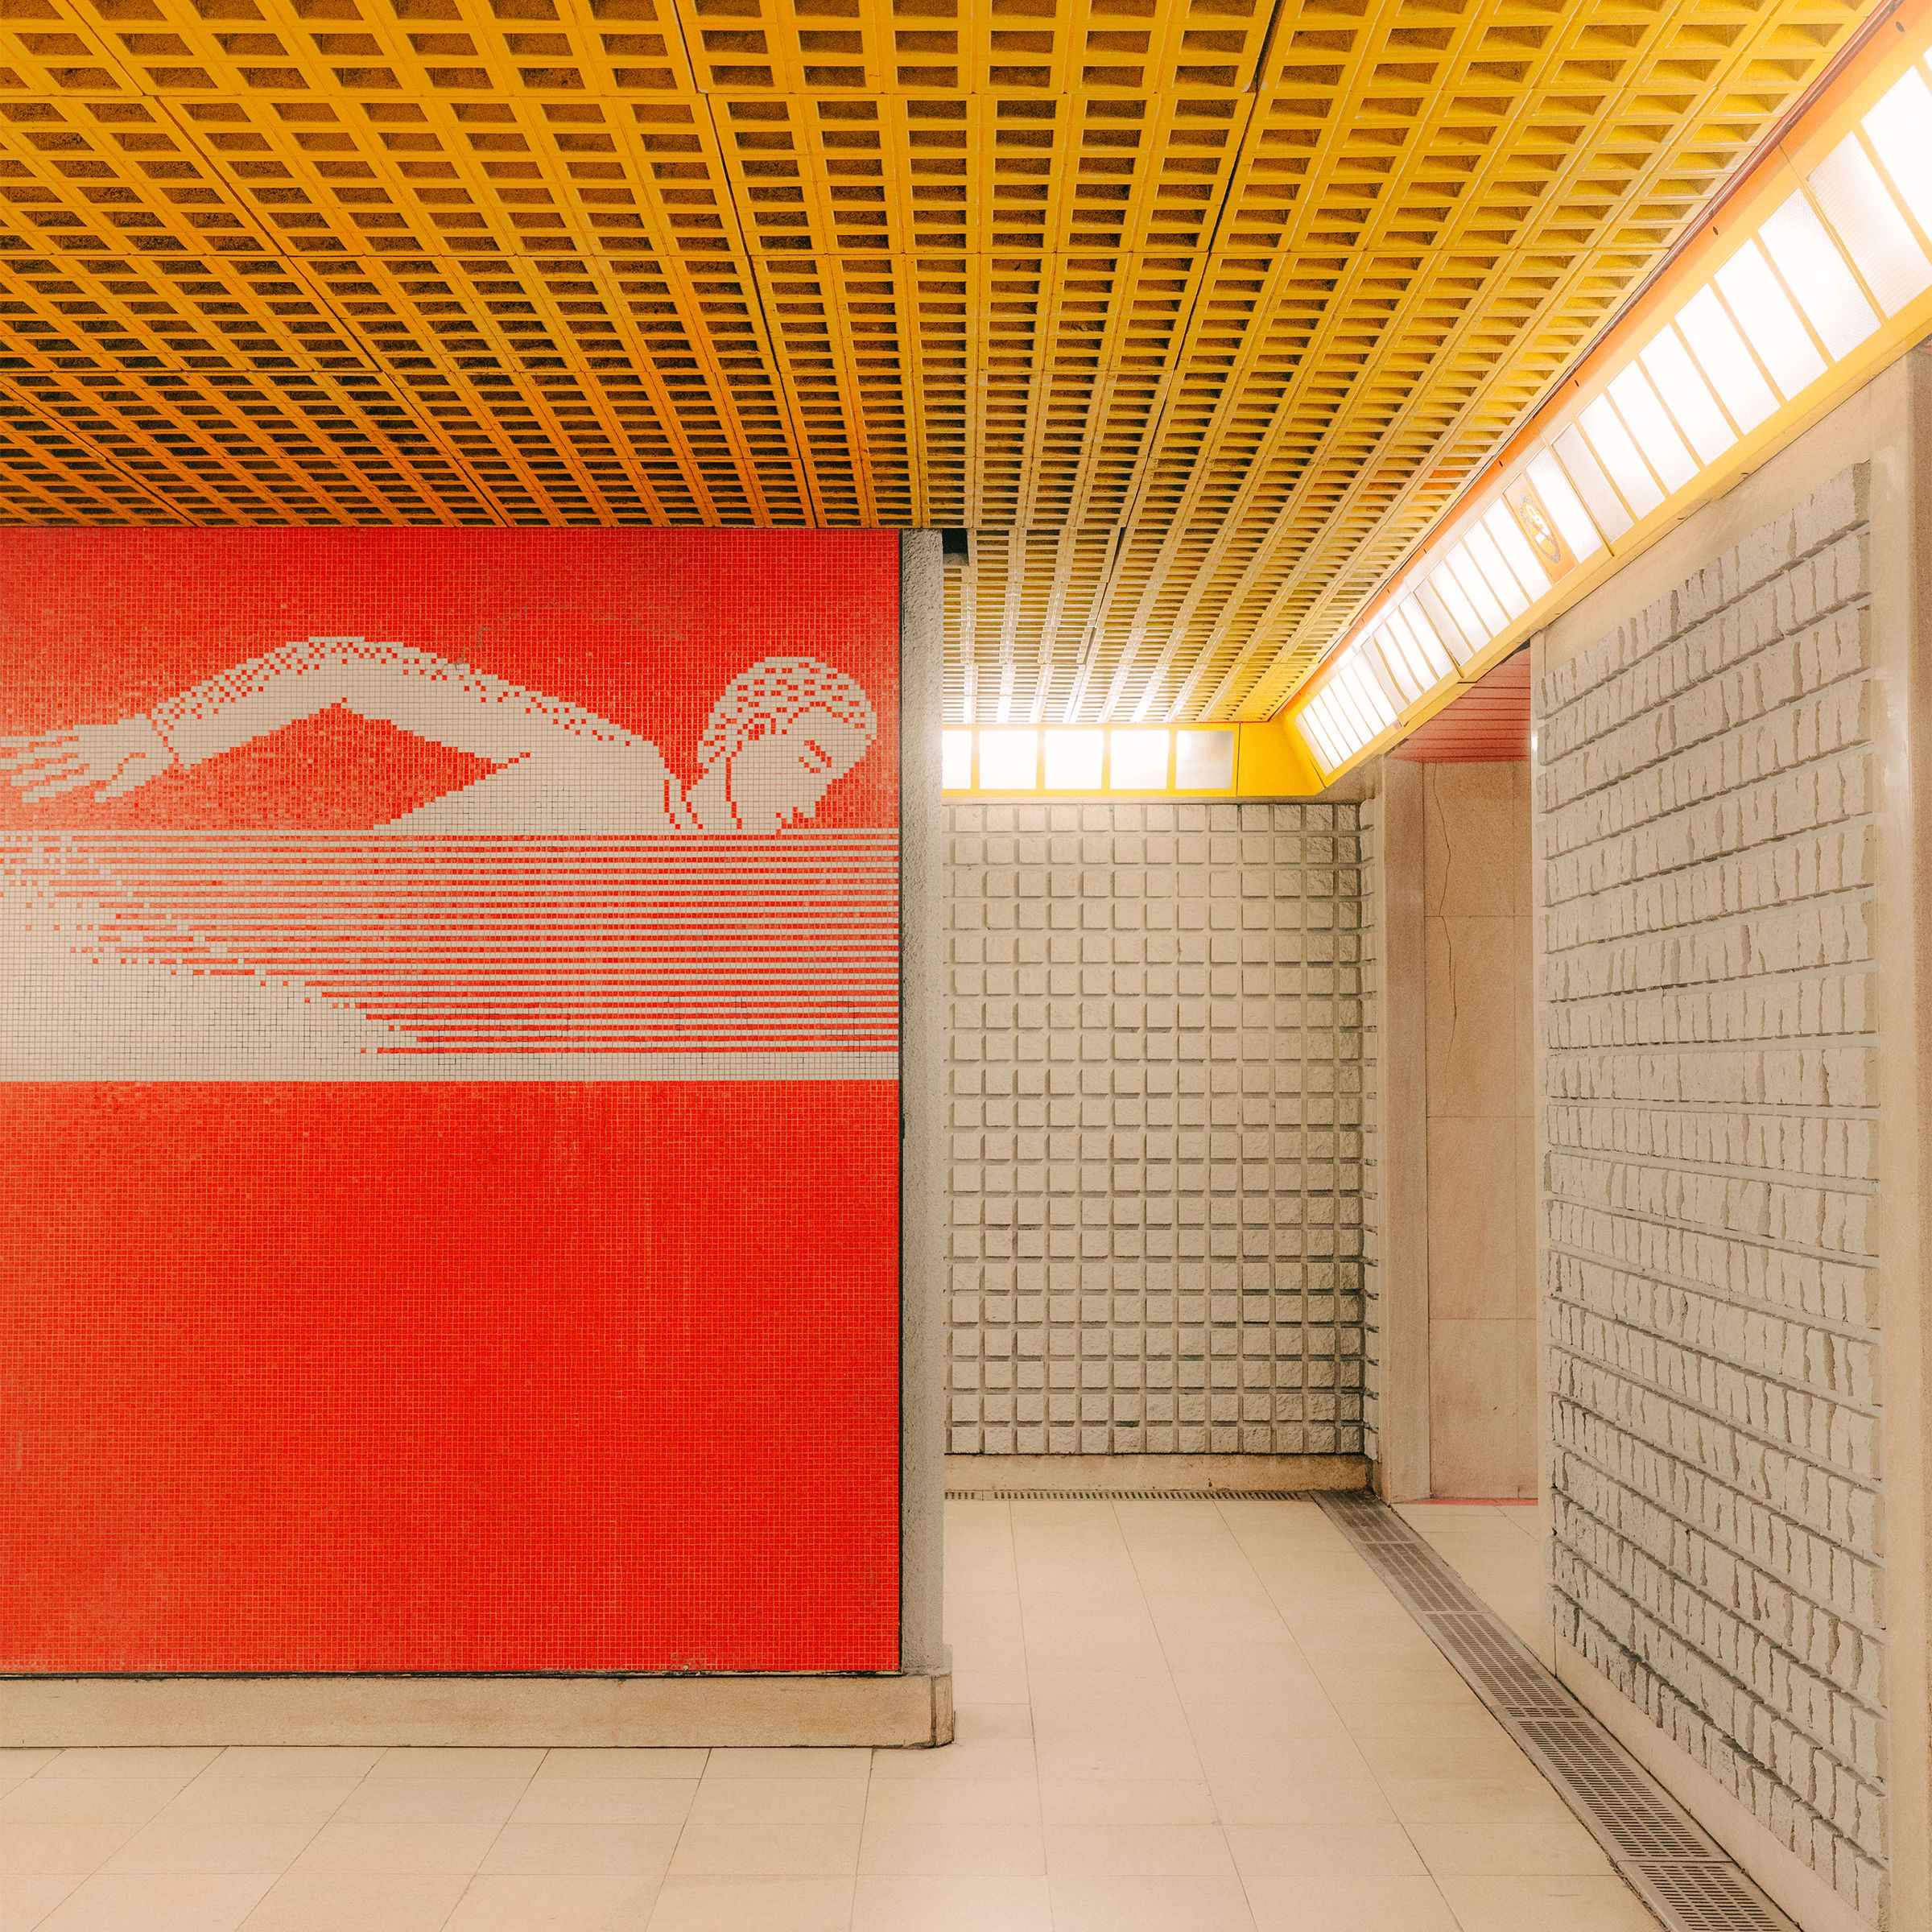 The Milan subway. Photography by Julius Hirtzberger for Art Basel.